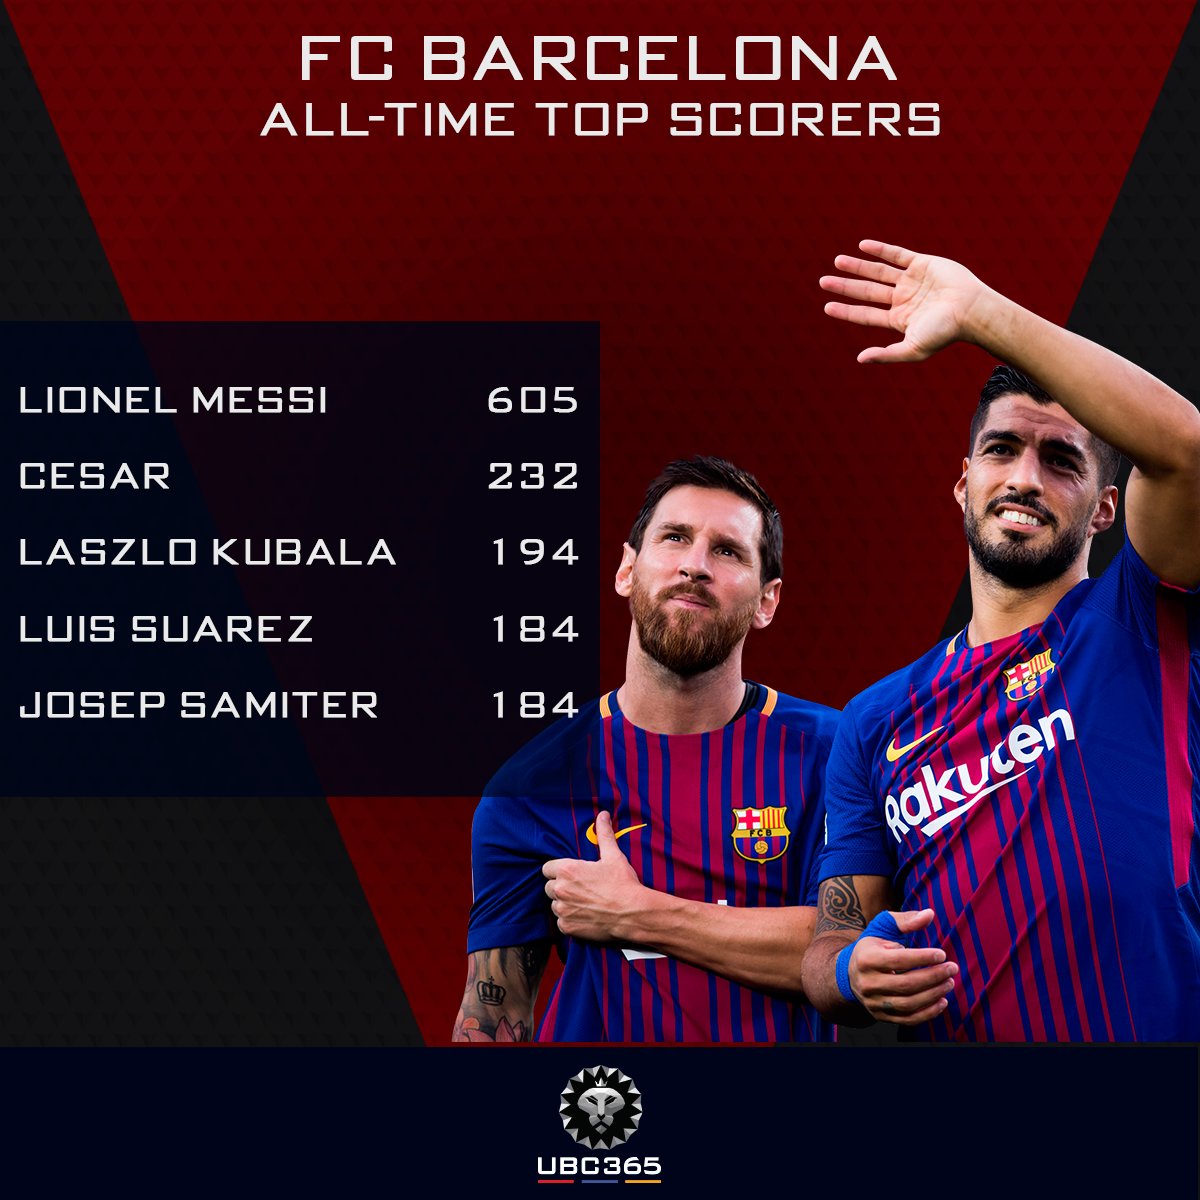 UBC365 on "Luis Suarez is now joint-fourth in Barcelona's list all-time top scorers. #Suarez #LuisSuarez #Messi #LionelMessi #FCBarcelona #FCBarca #Barca #Barcelona #LaLiga #FootballNews https://t.co/3exUxpJVwR" / Twitter